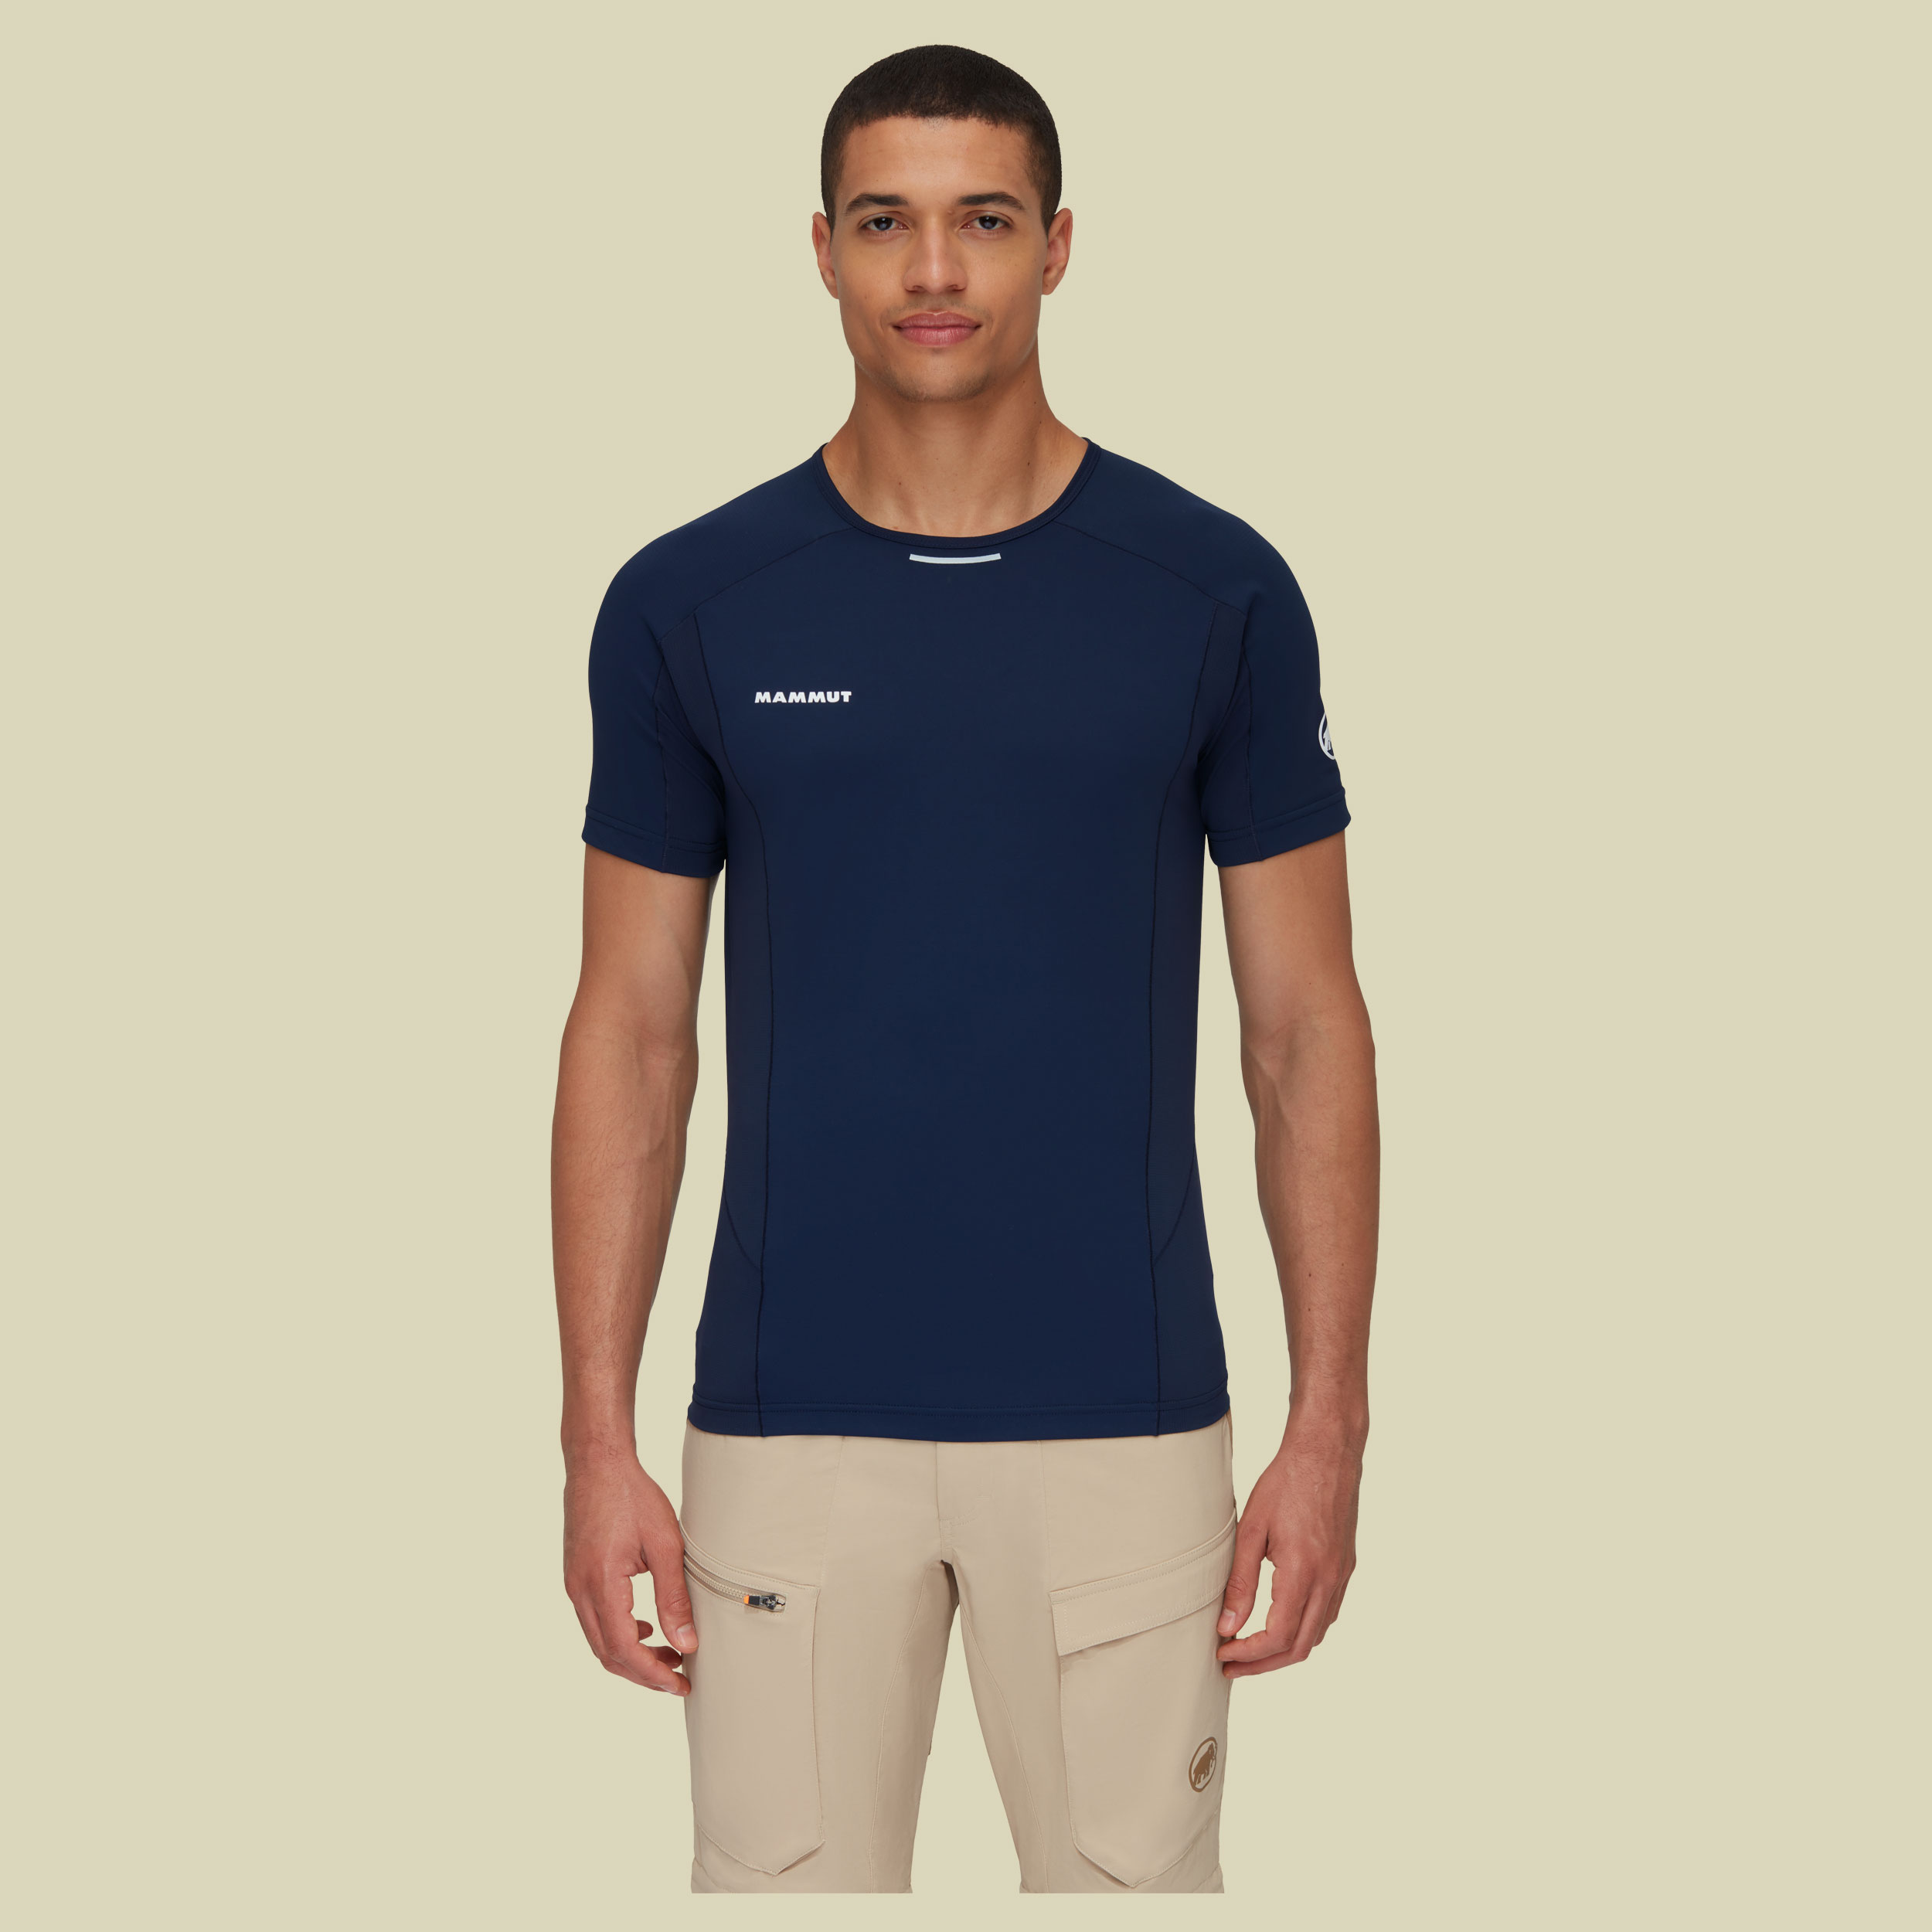 Aenergy FL T-Shirt Men marine XXL